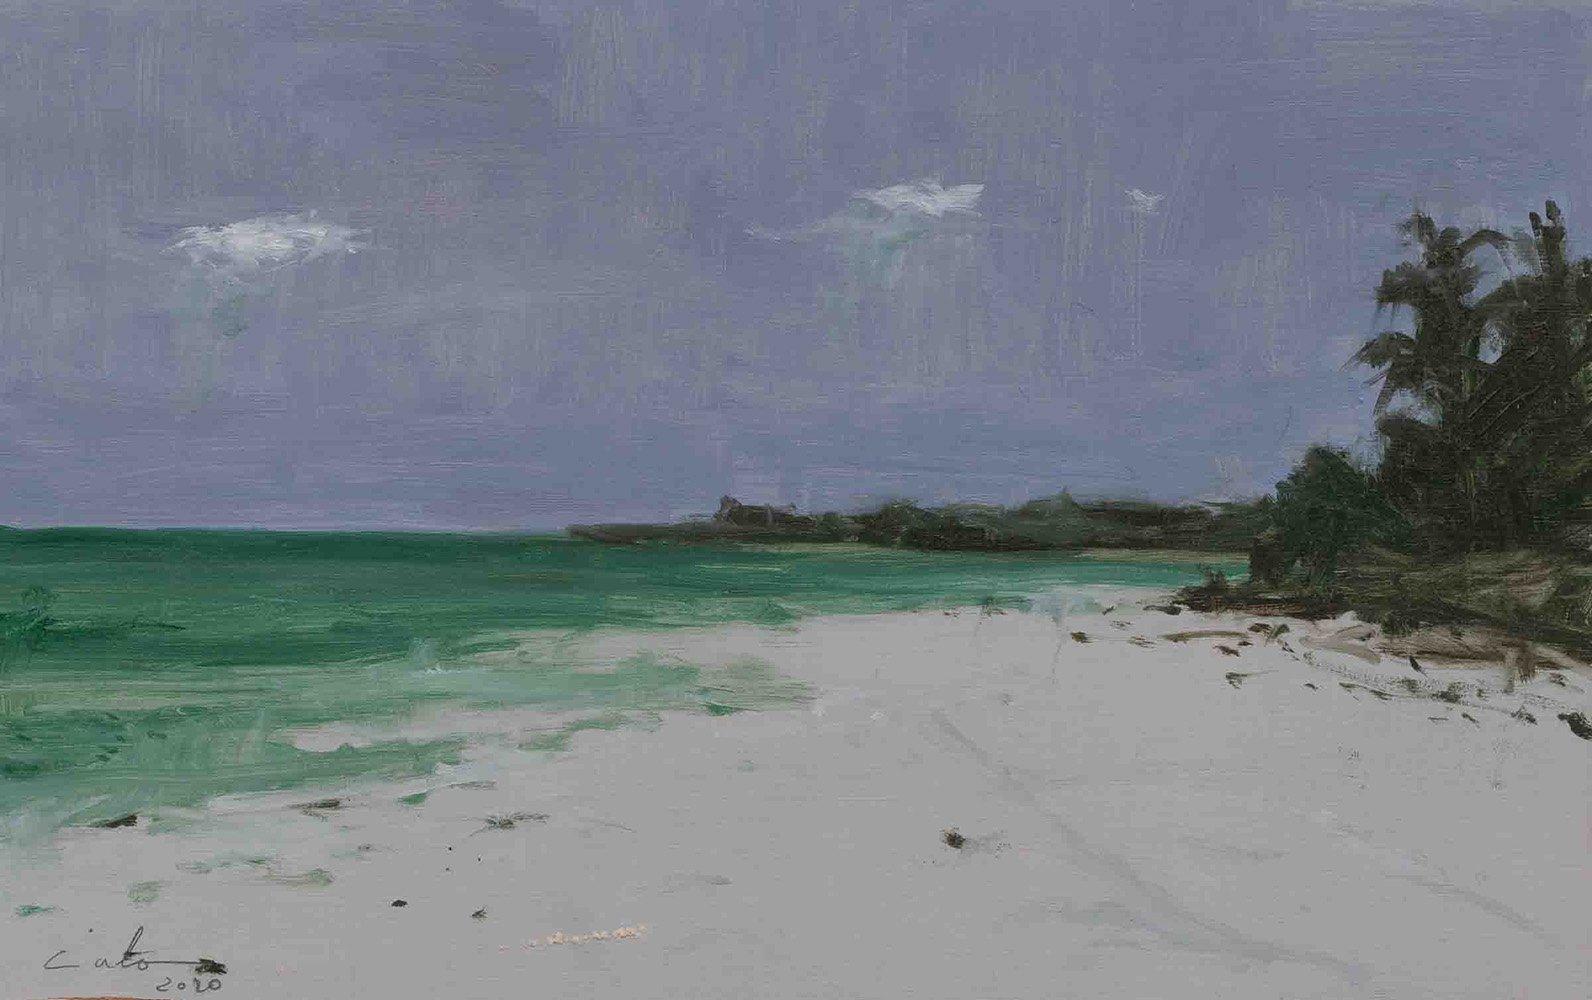 Marinas n°9 by Calo Carratalá - Beach landscape painting, summer, Tanzania